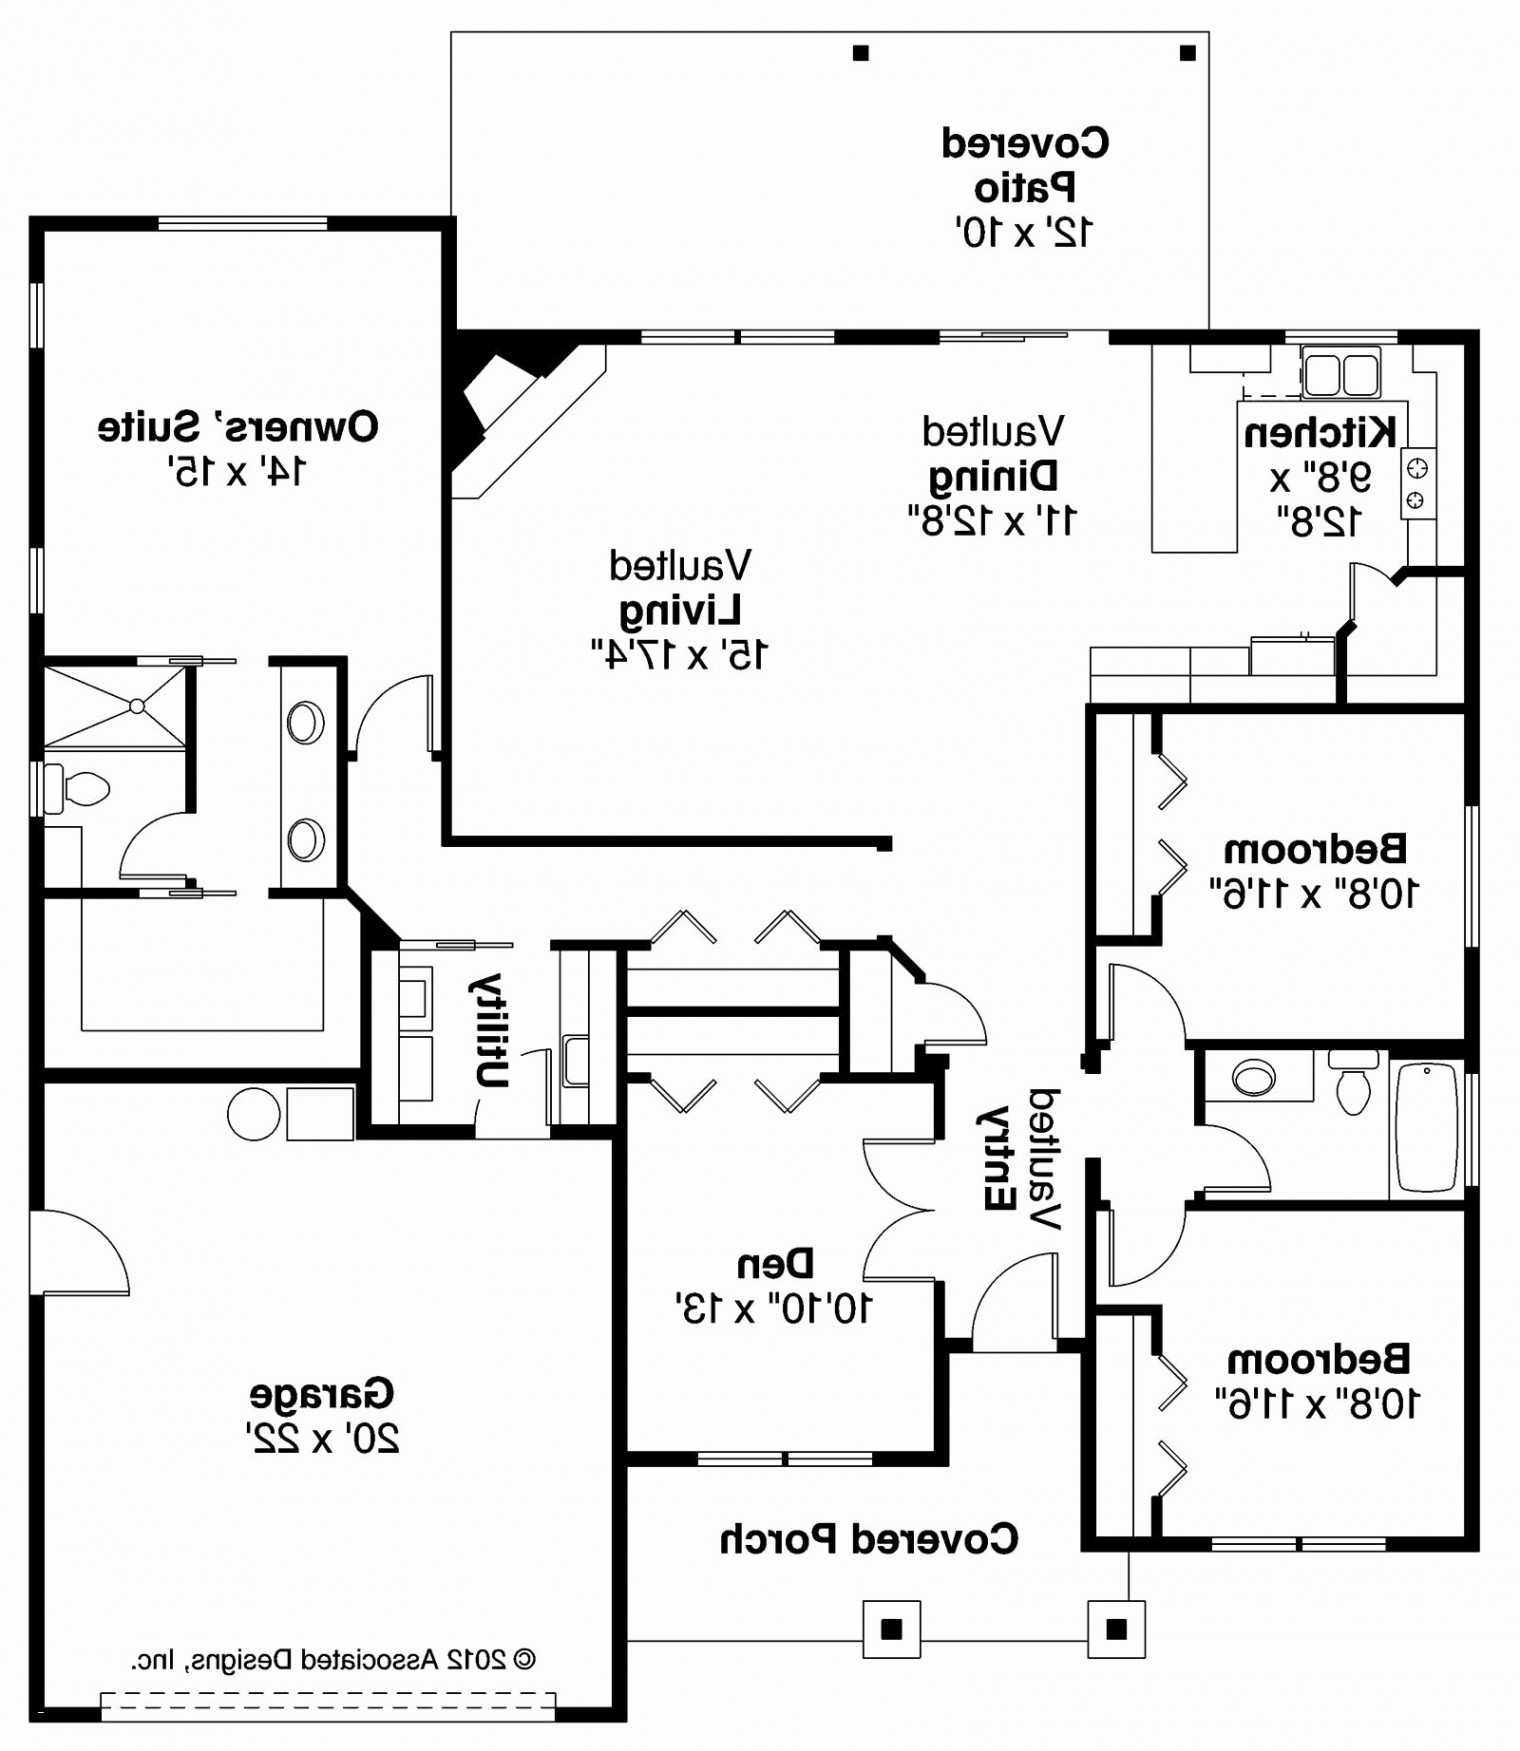 Electric Motor Diagram – Wiring Diagram Inspirational House Wiring Diagram Electrical Floor